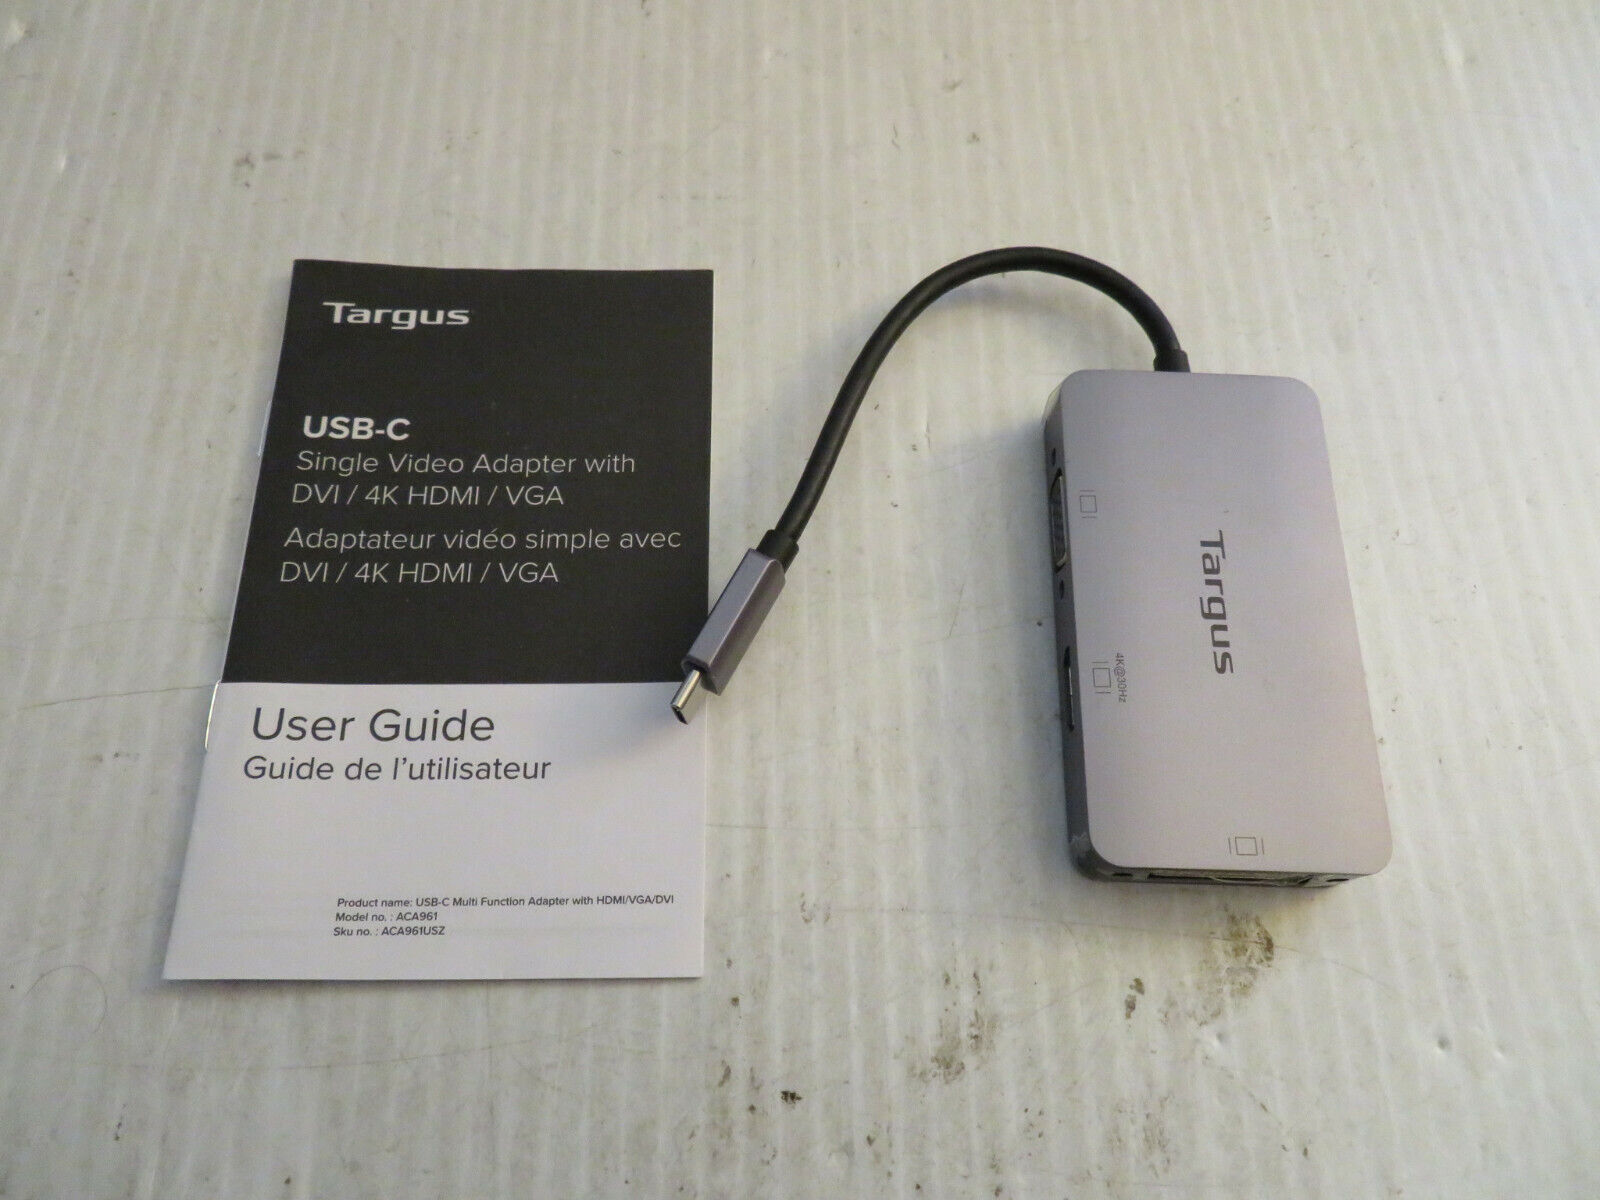 Targus ACA961USZ USB-C Multi Function Adapter with USB C to HDMI / VGA / DVI